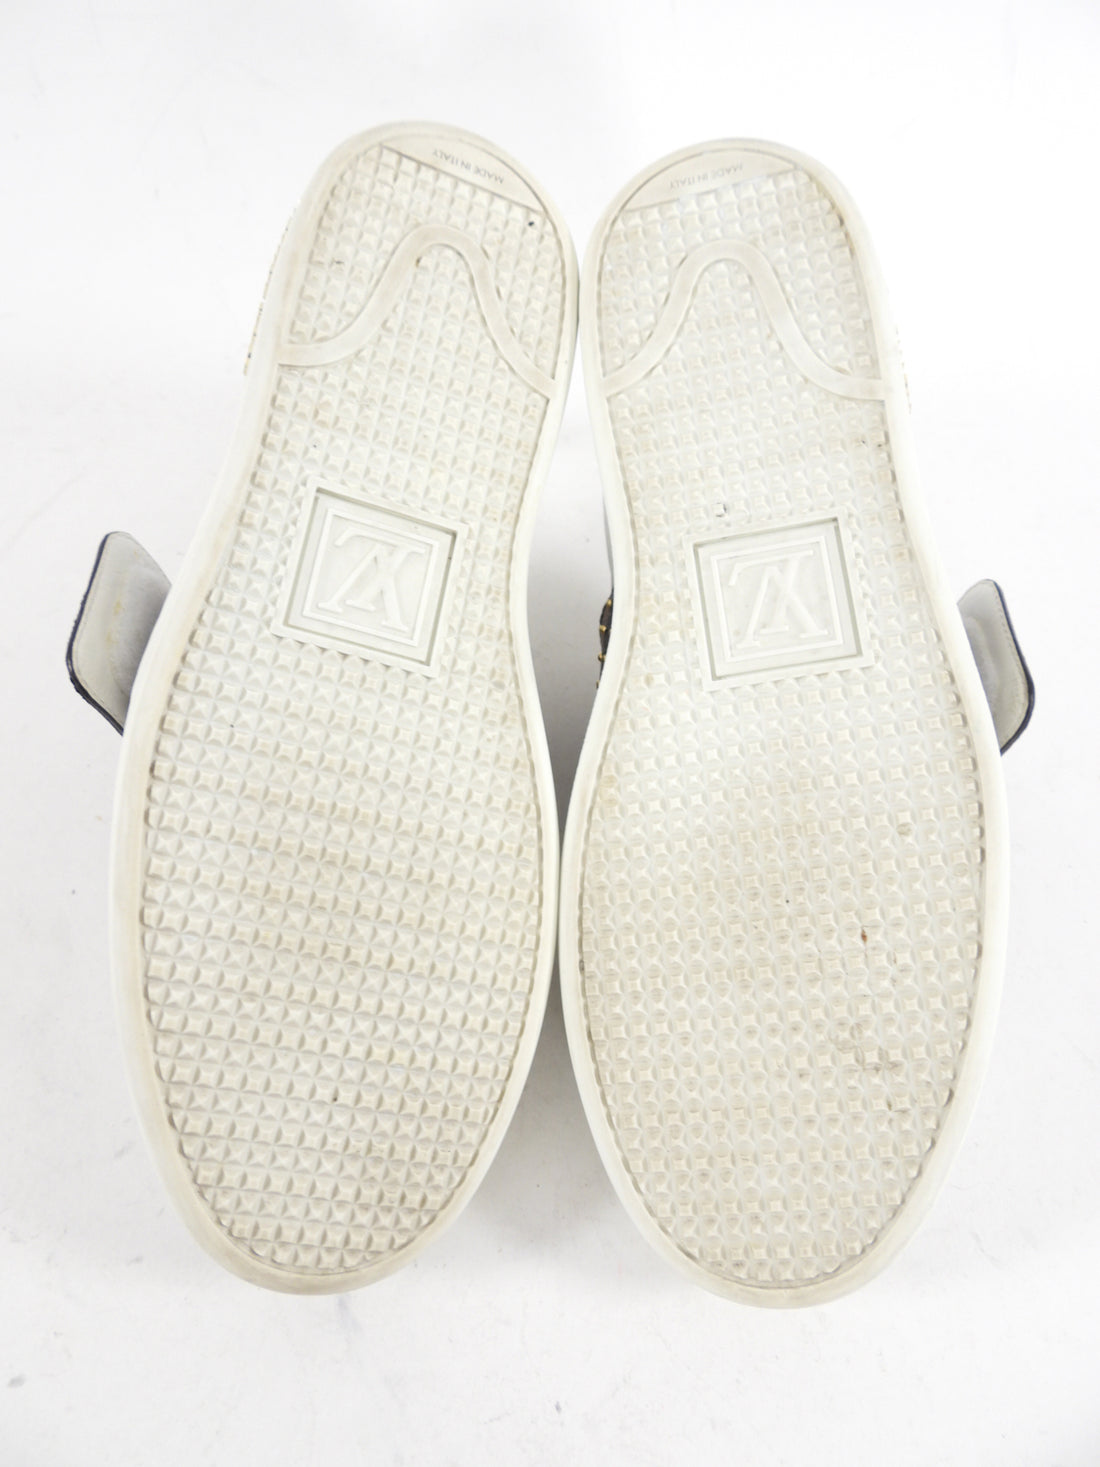 Louis vuitton White and Monogram Canvas Low Sneakers - EU38 / 7.5